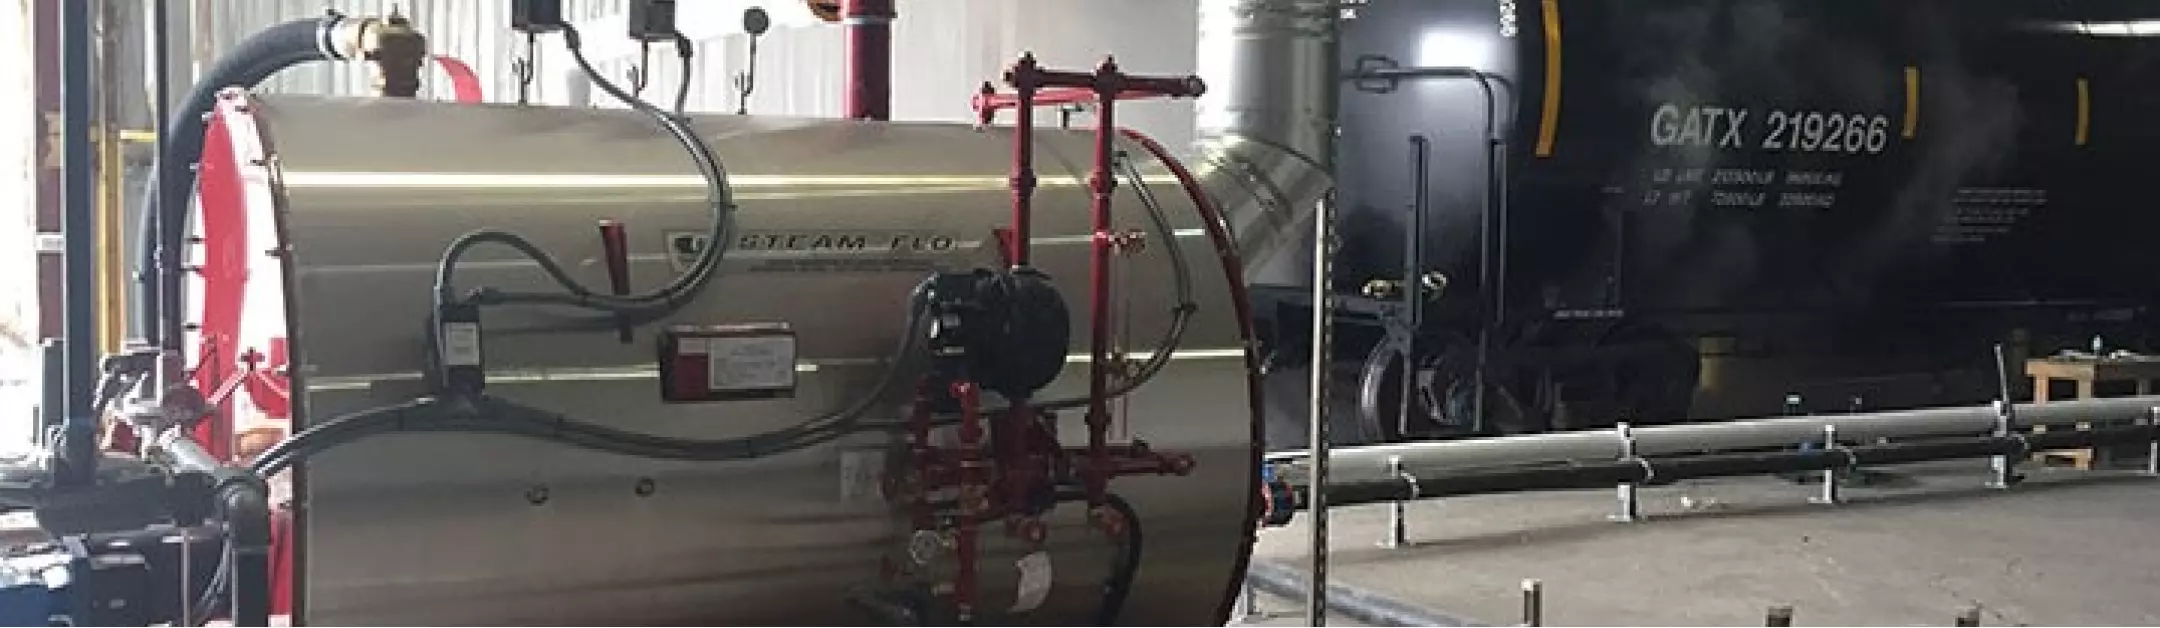 Sioux Low Pressure Steam-Flo Steam Generators